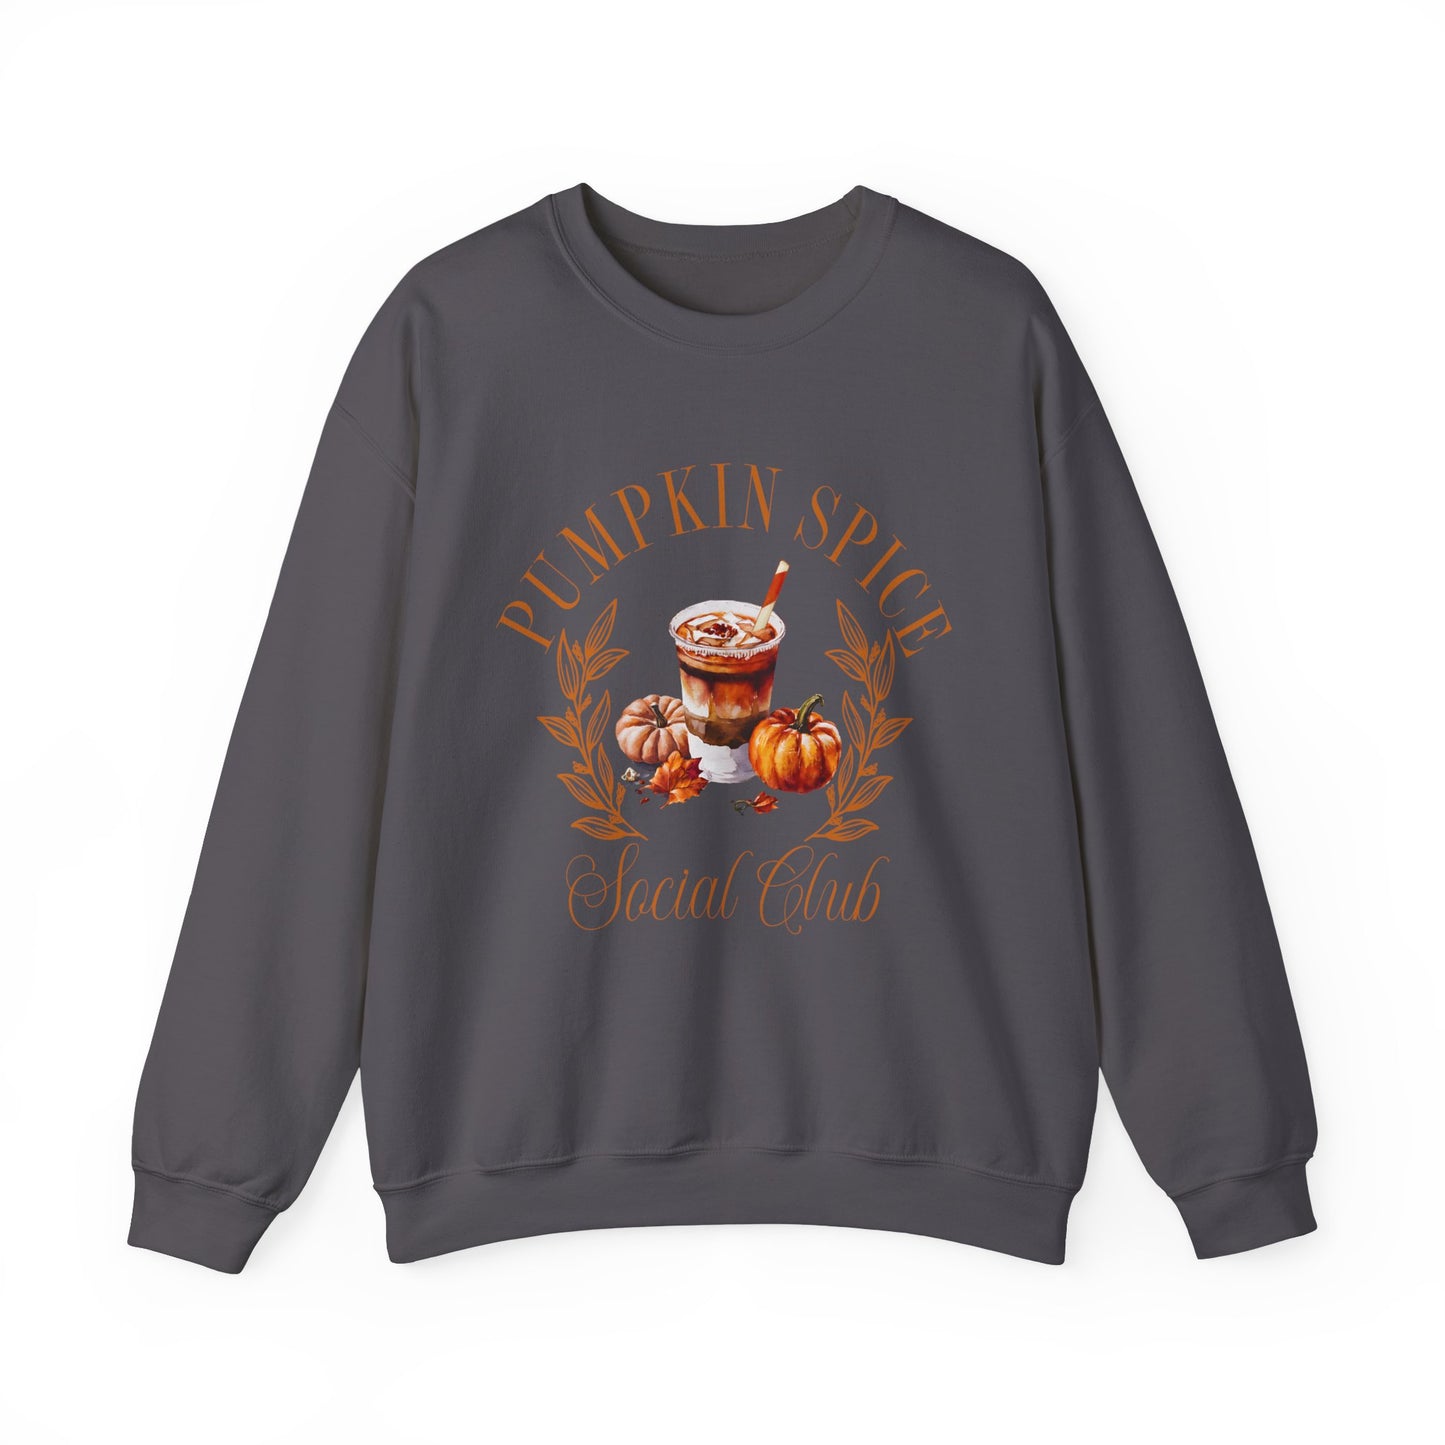 Pumpkin Spice Social Club - Crewneck Sweatshirt